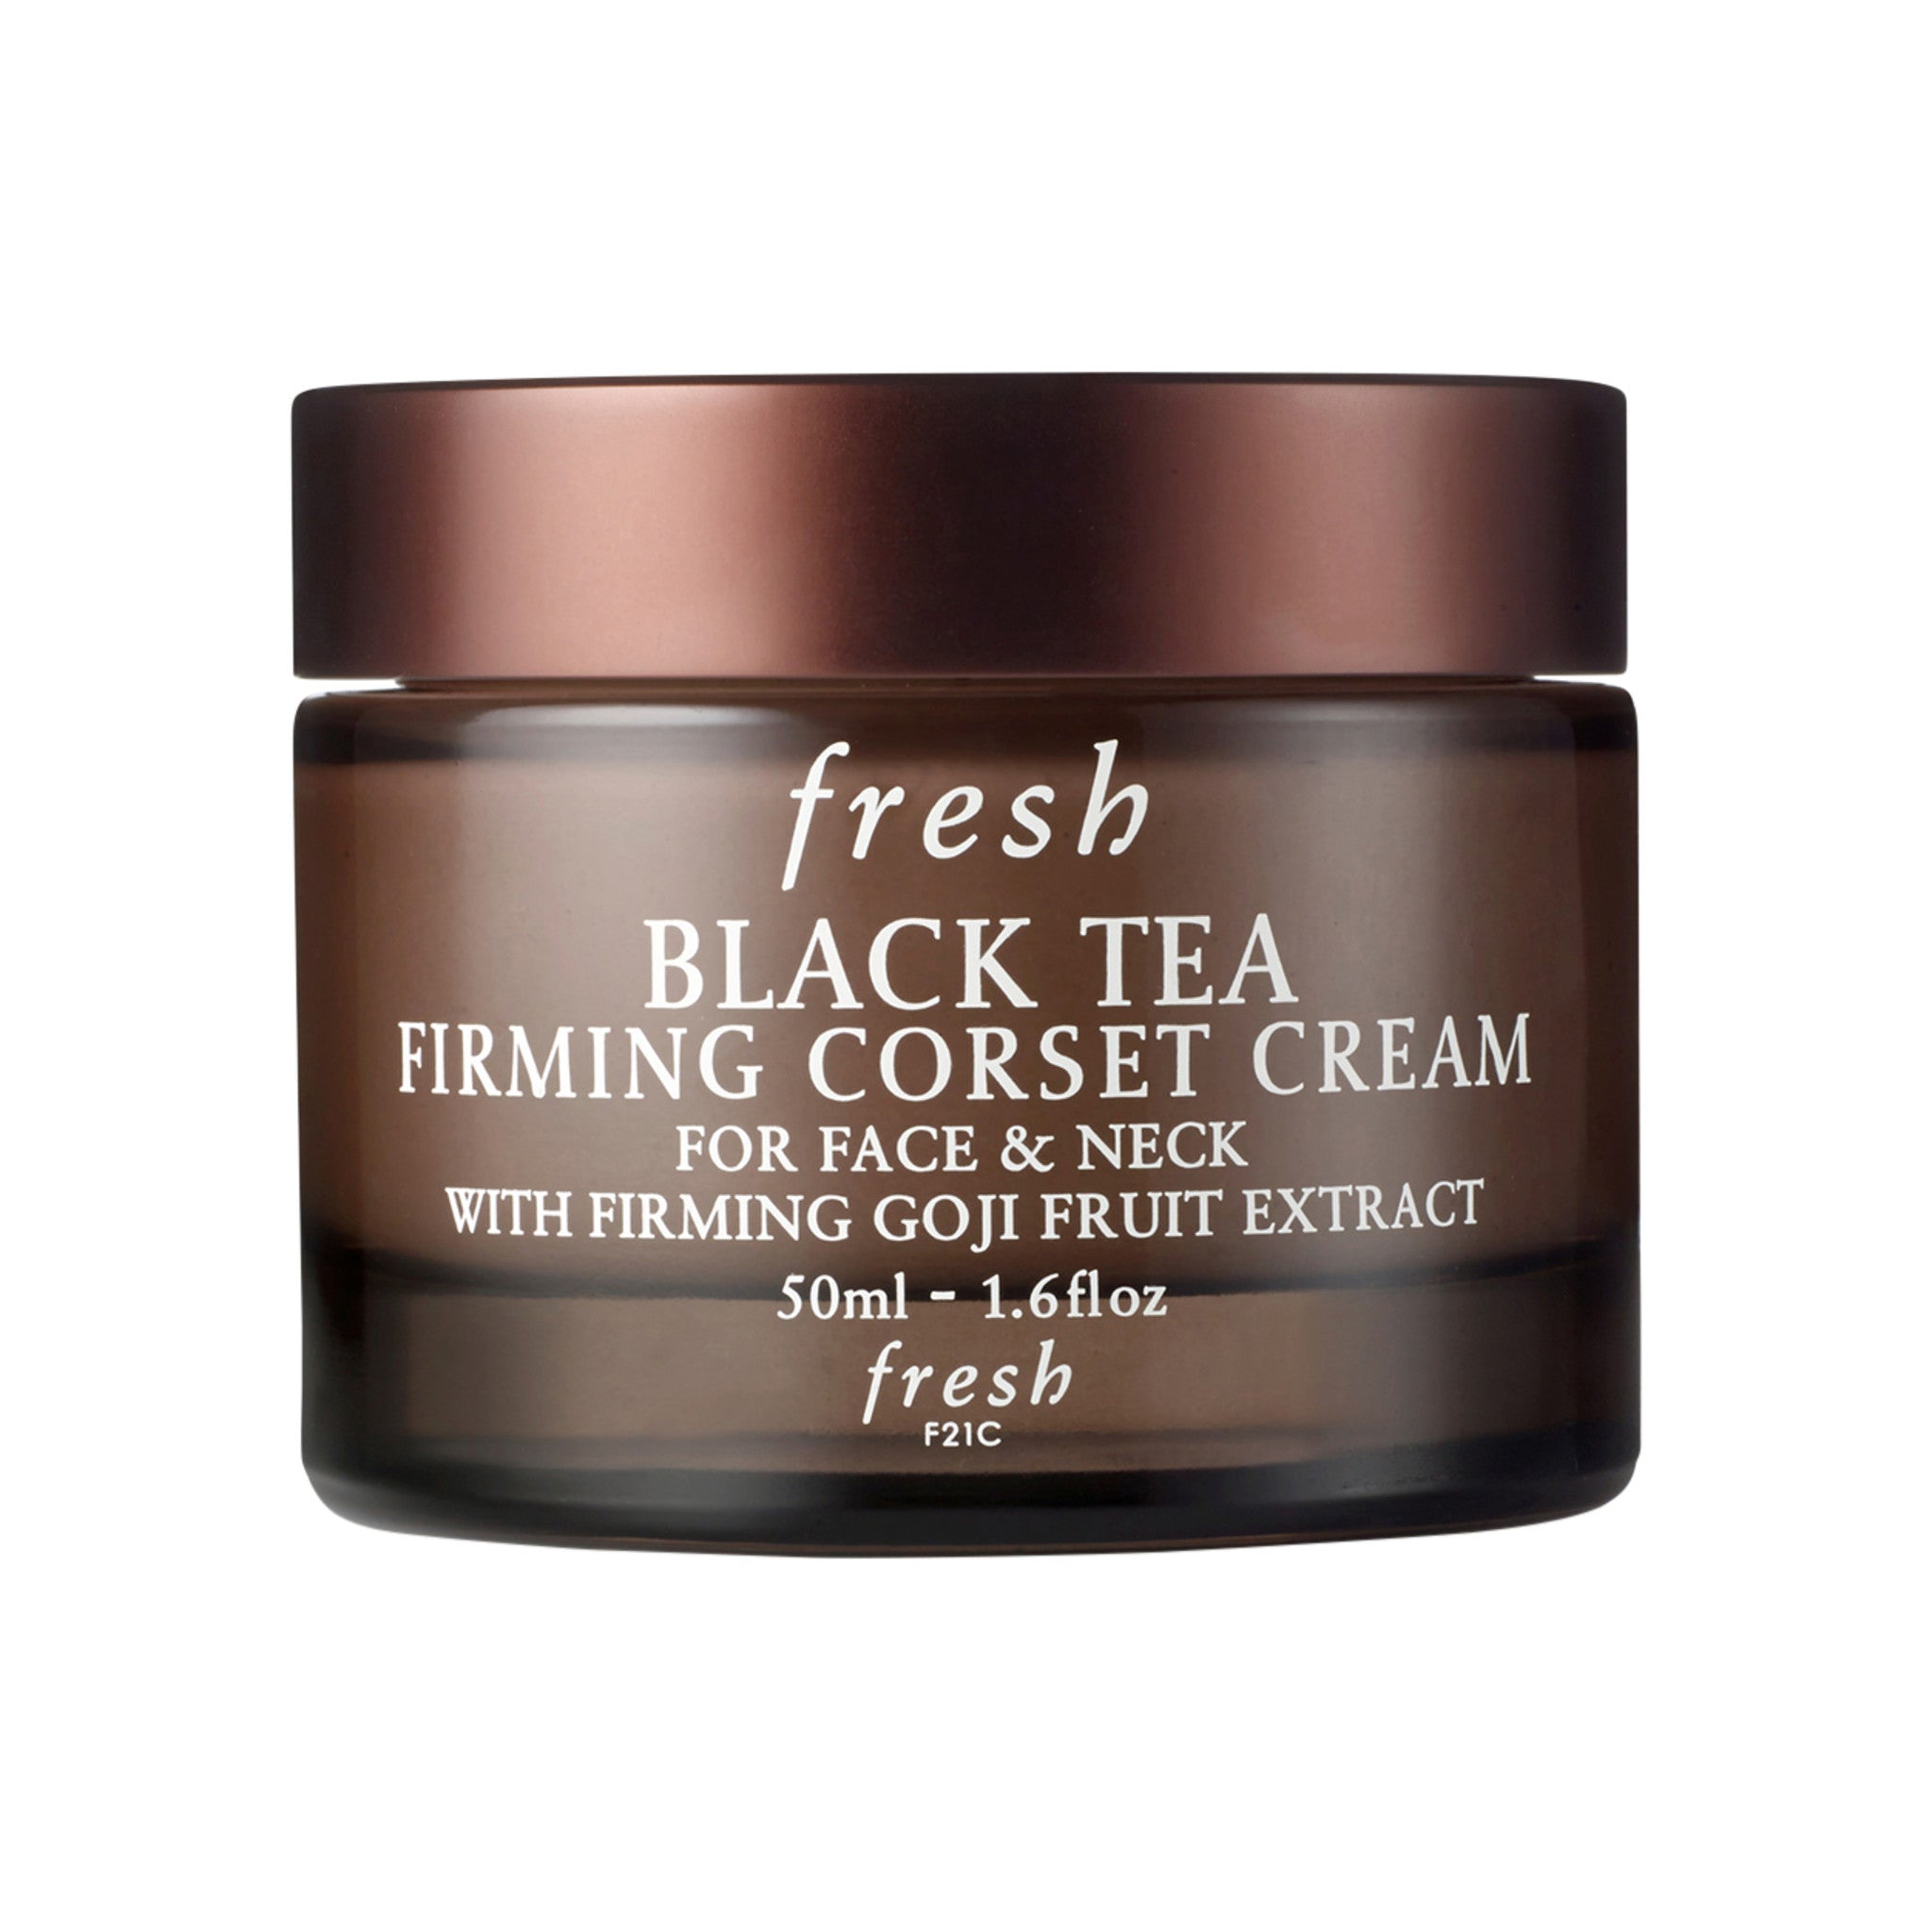 Fresh Black Tea Corset Cream Firming Moisturizer main image.